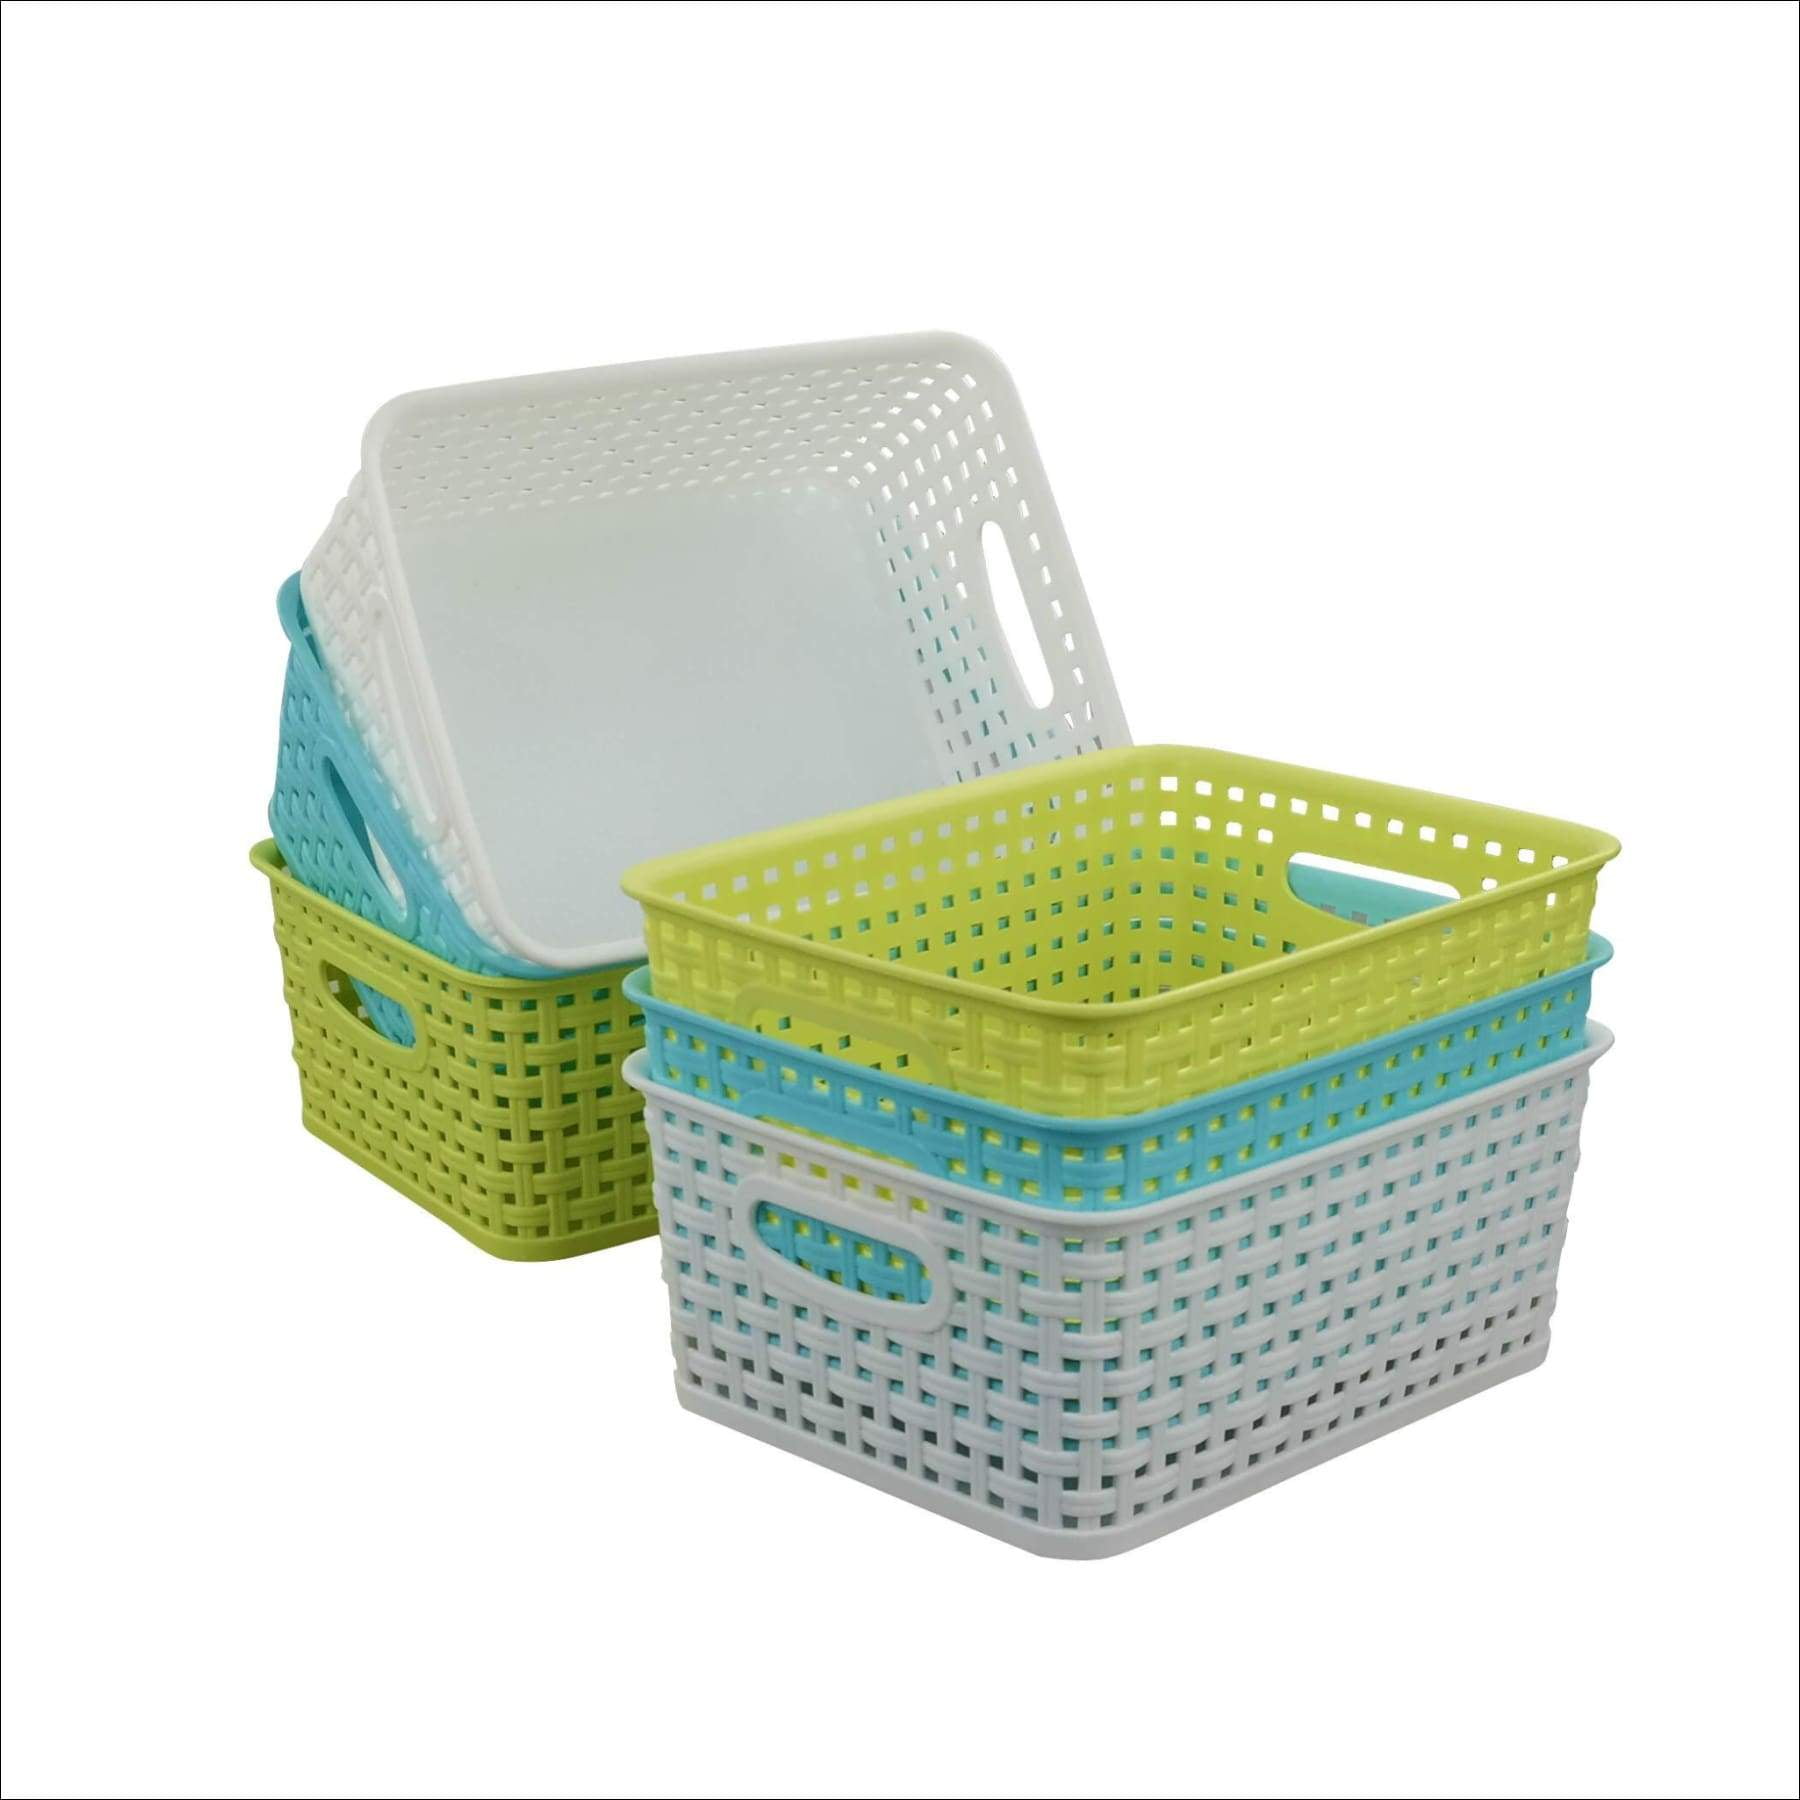 Qsbon Plastic Storage Baskets / Bins Organizer for Bathroom, 6-Pack